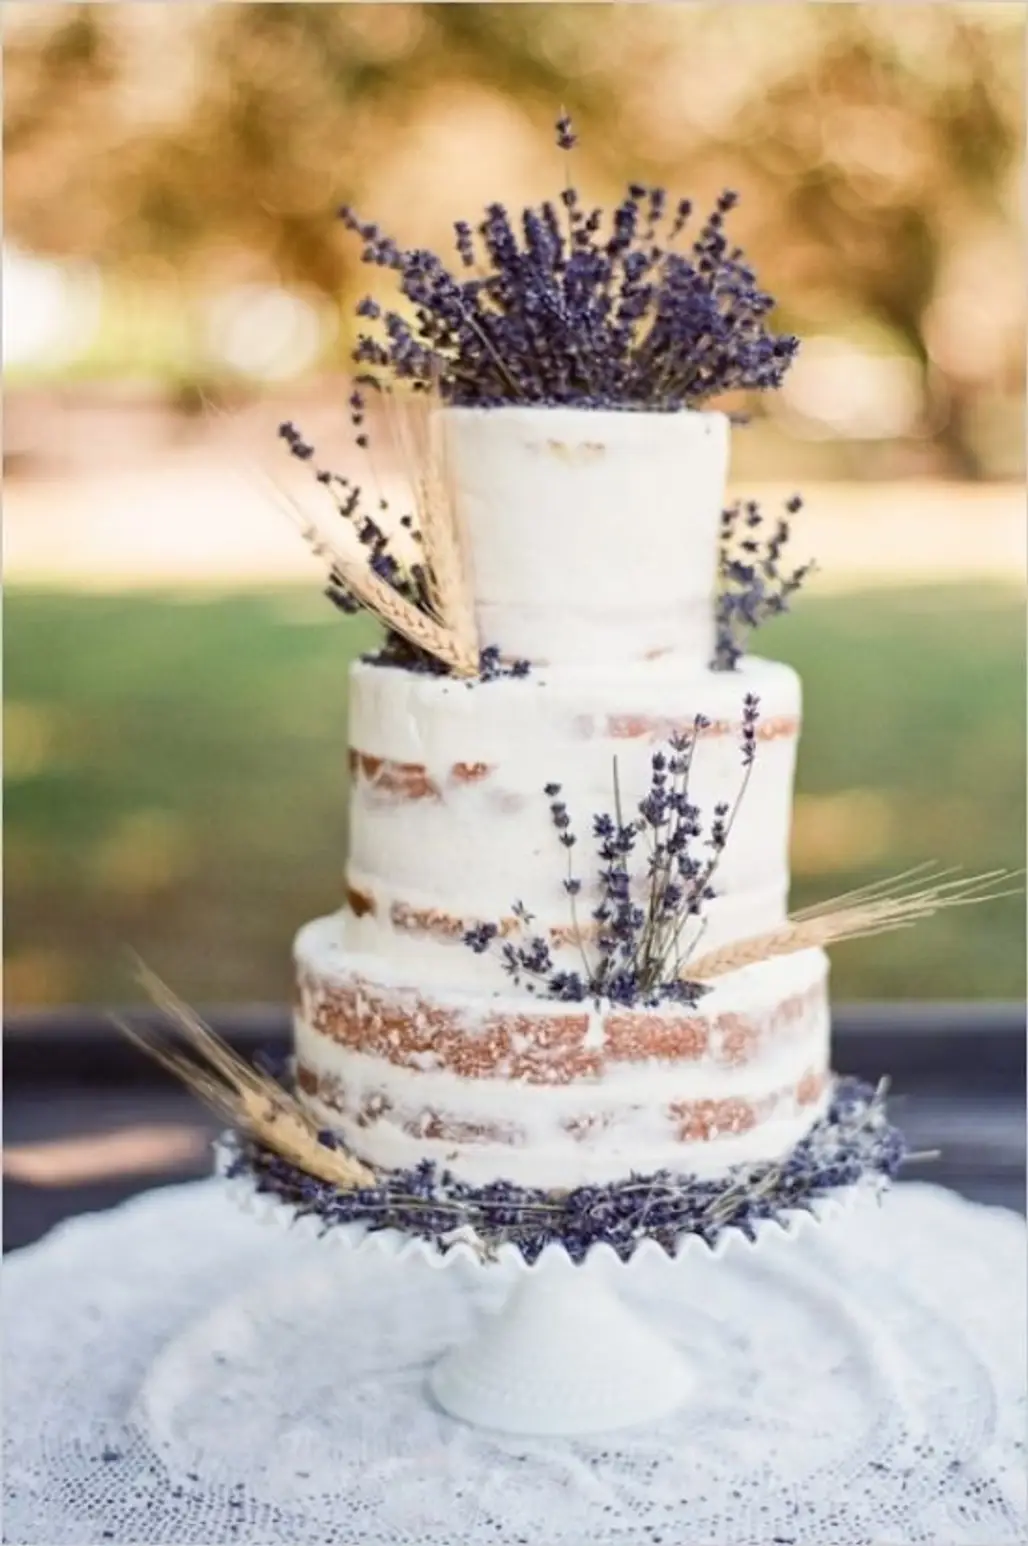 wedding cake,white,buttercream,cake,food,